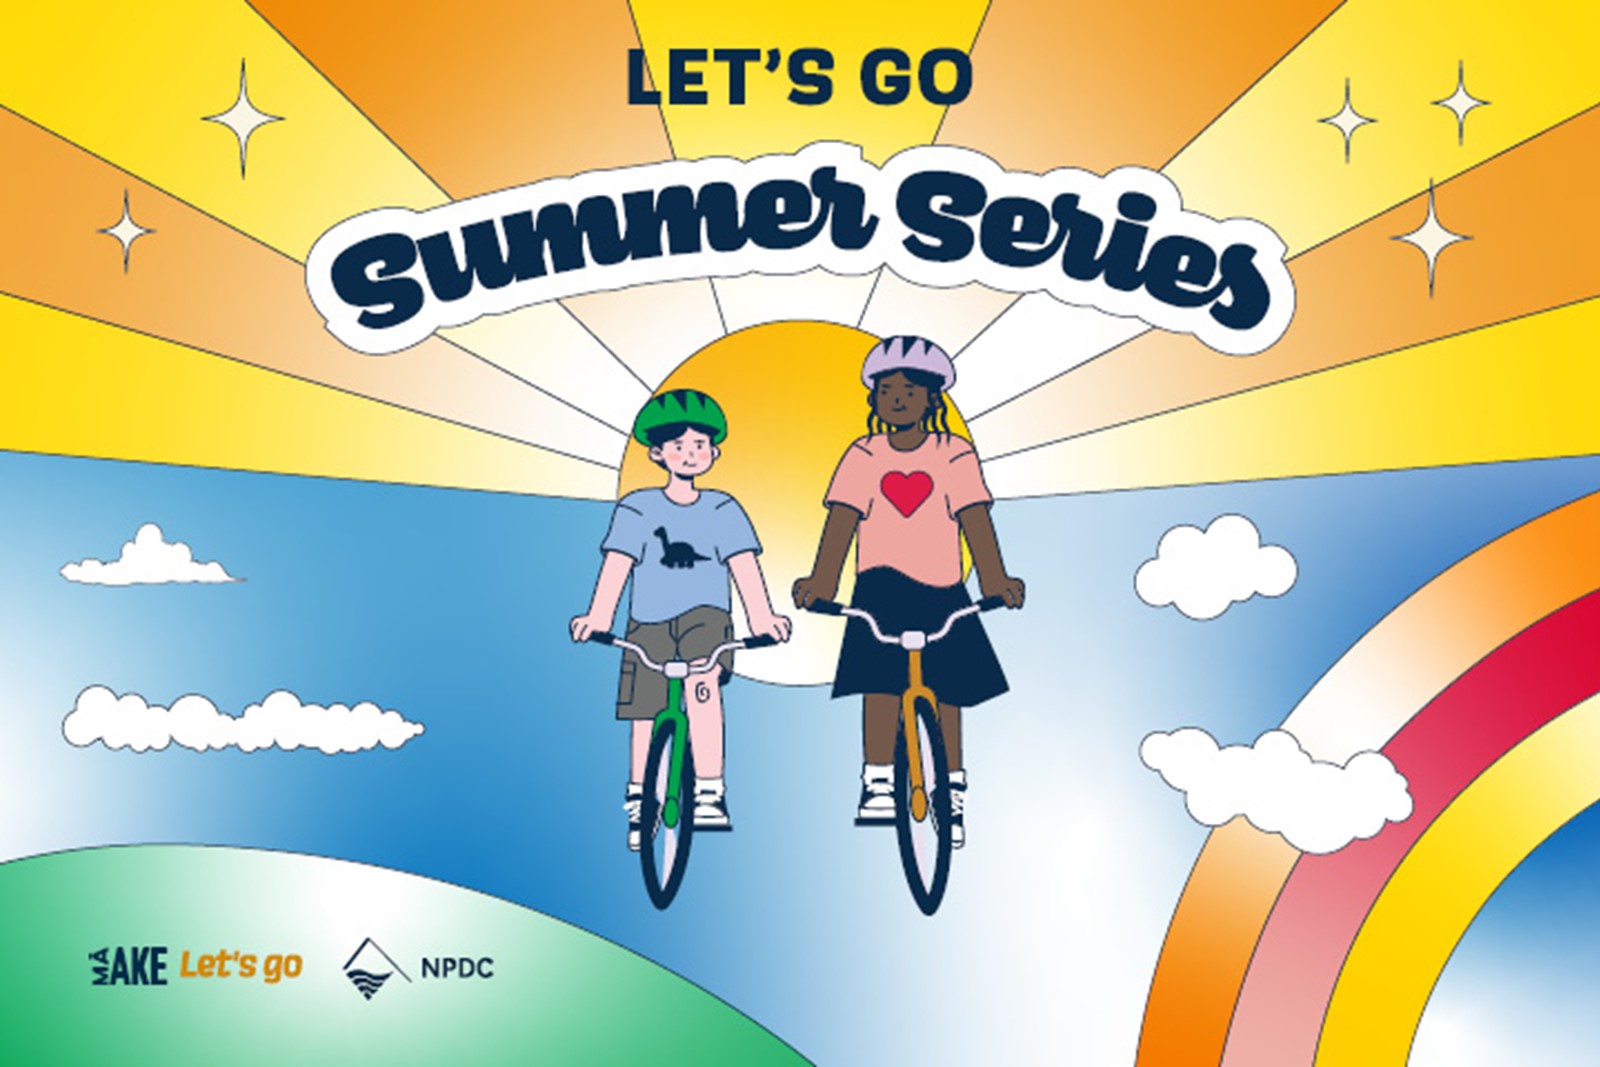 Let's Go Summer Series Bike Park Fun web tile.